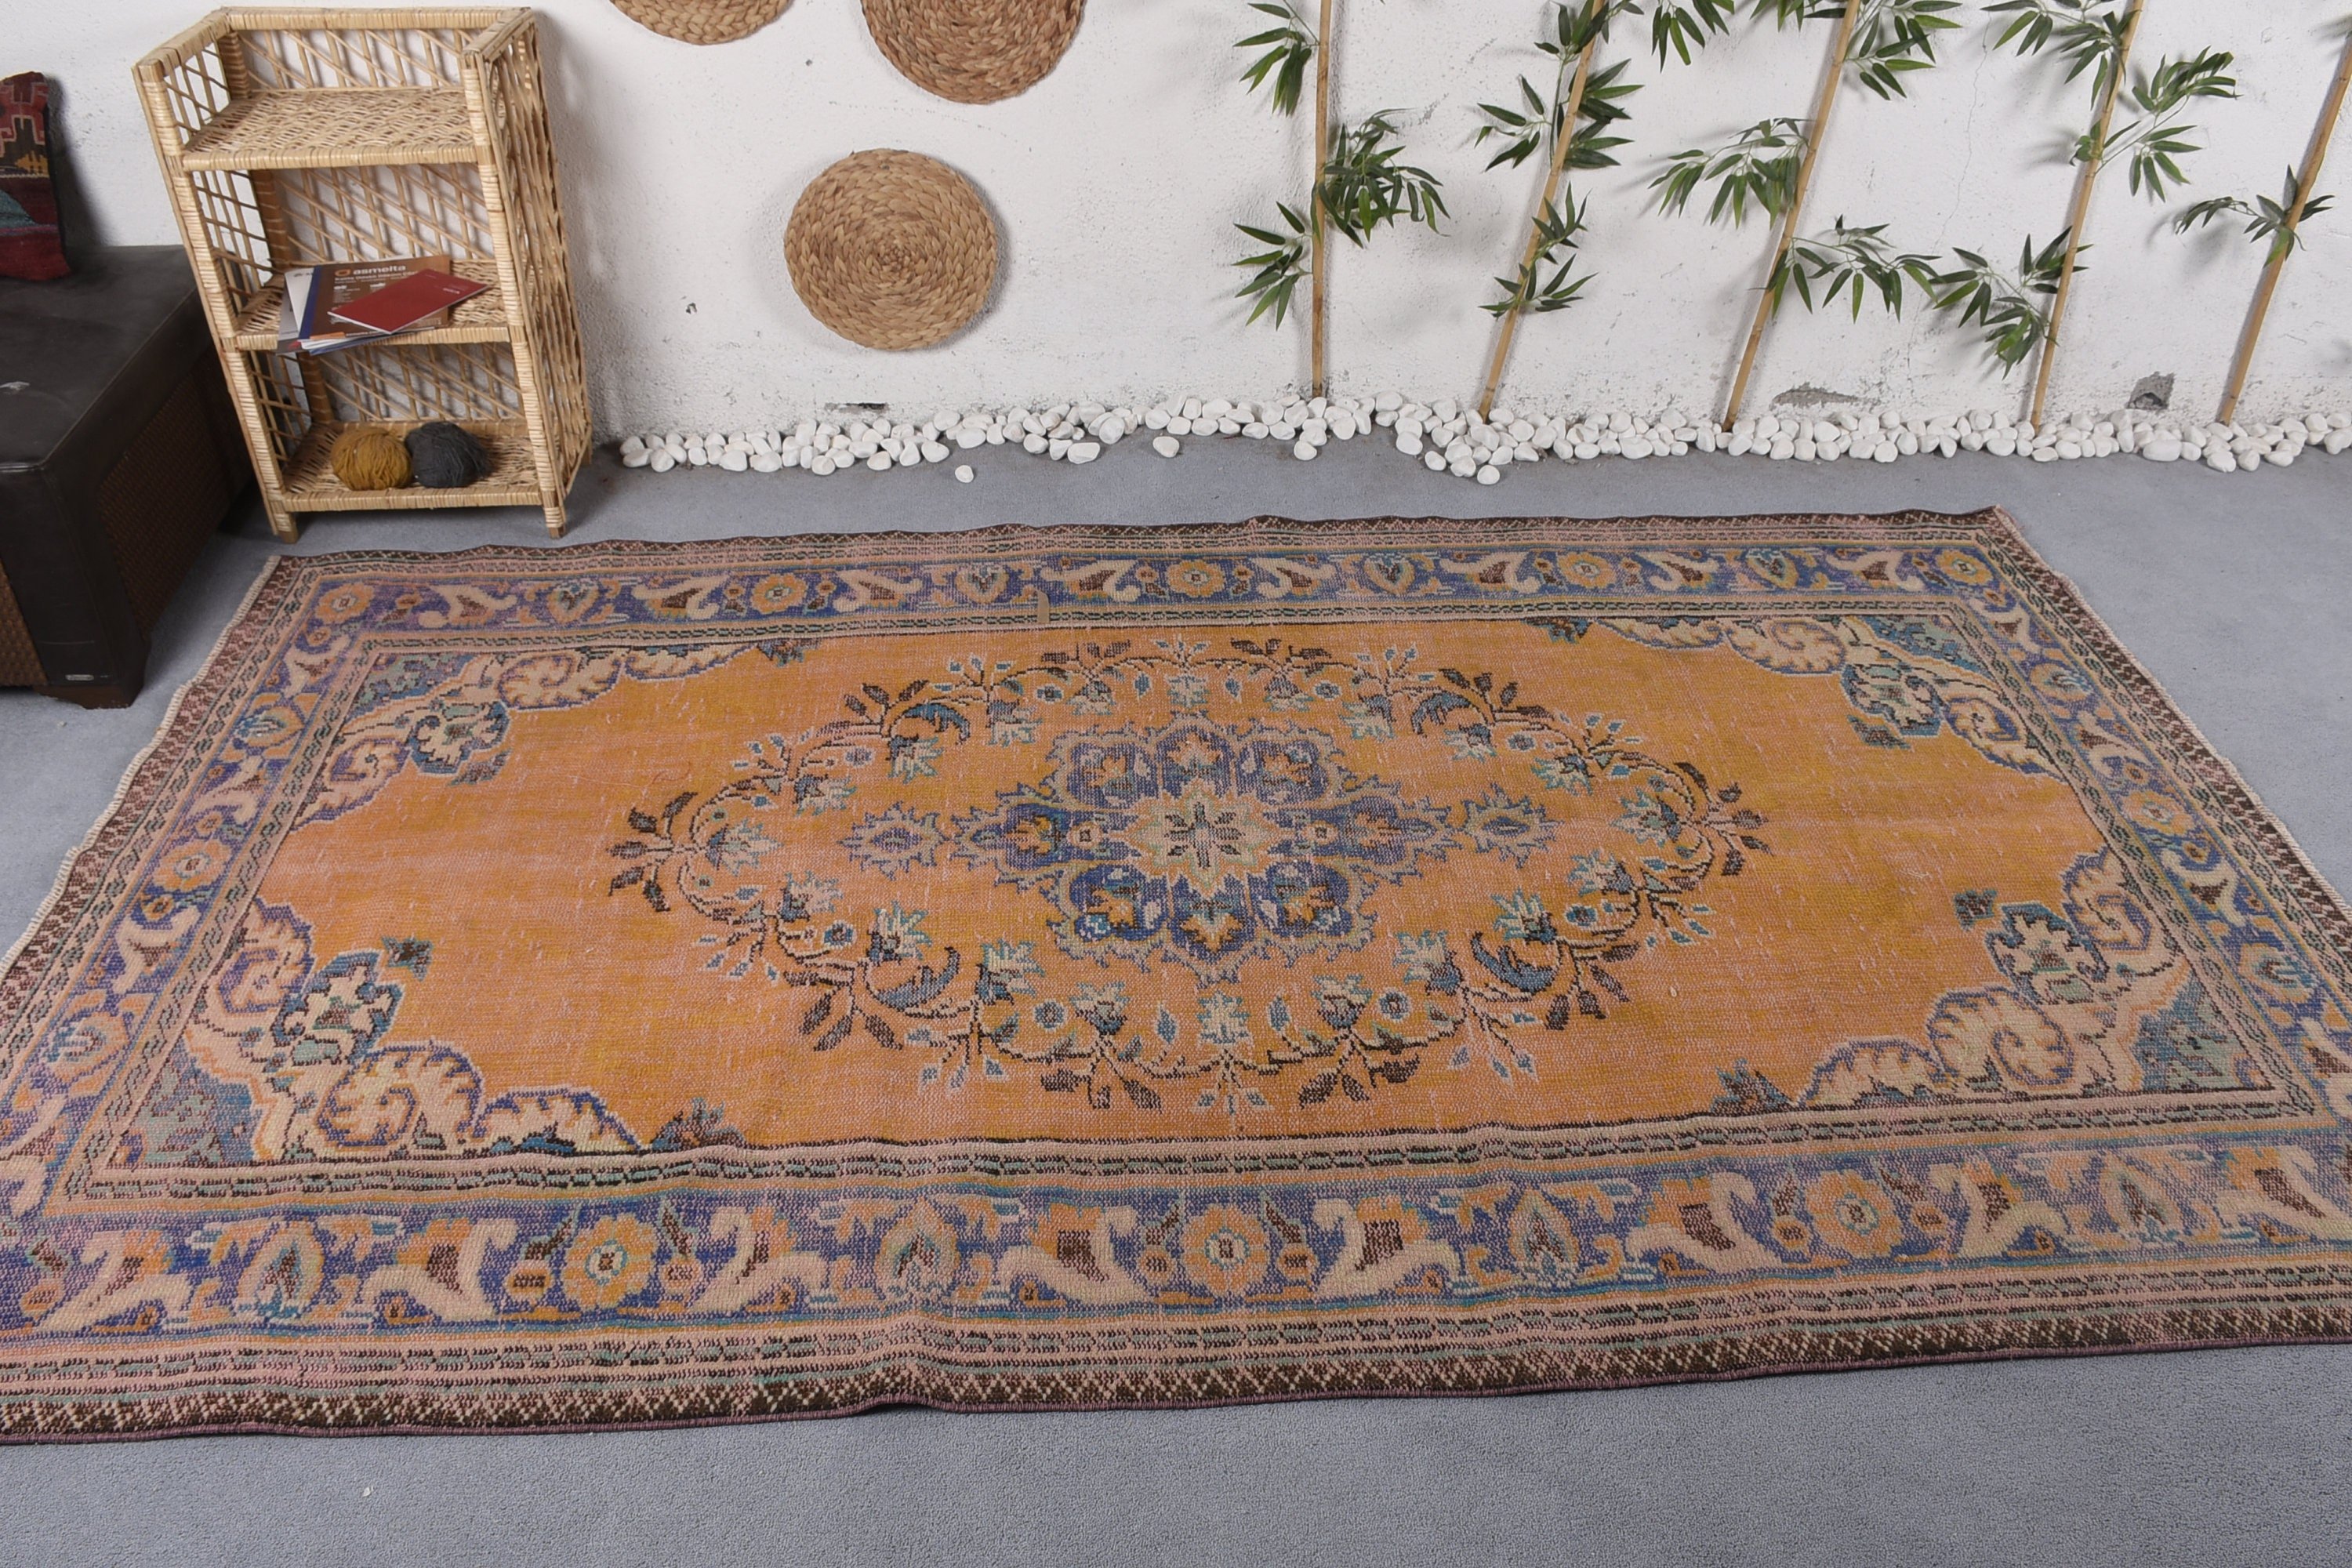 Turkish Rug, Living Room Rug, Orange Antique Rug, 5.8x9.8 ft Large Rugs, Anatolian Rugs, Dining Room Rugs, Vintage Rugs